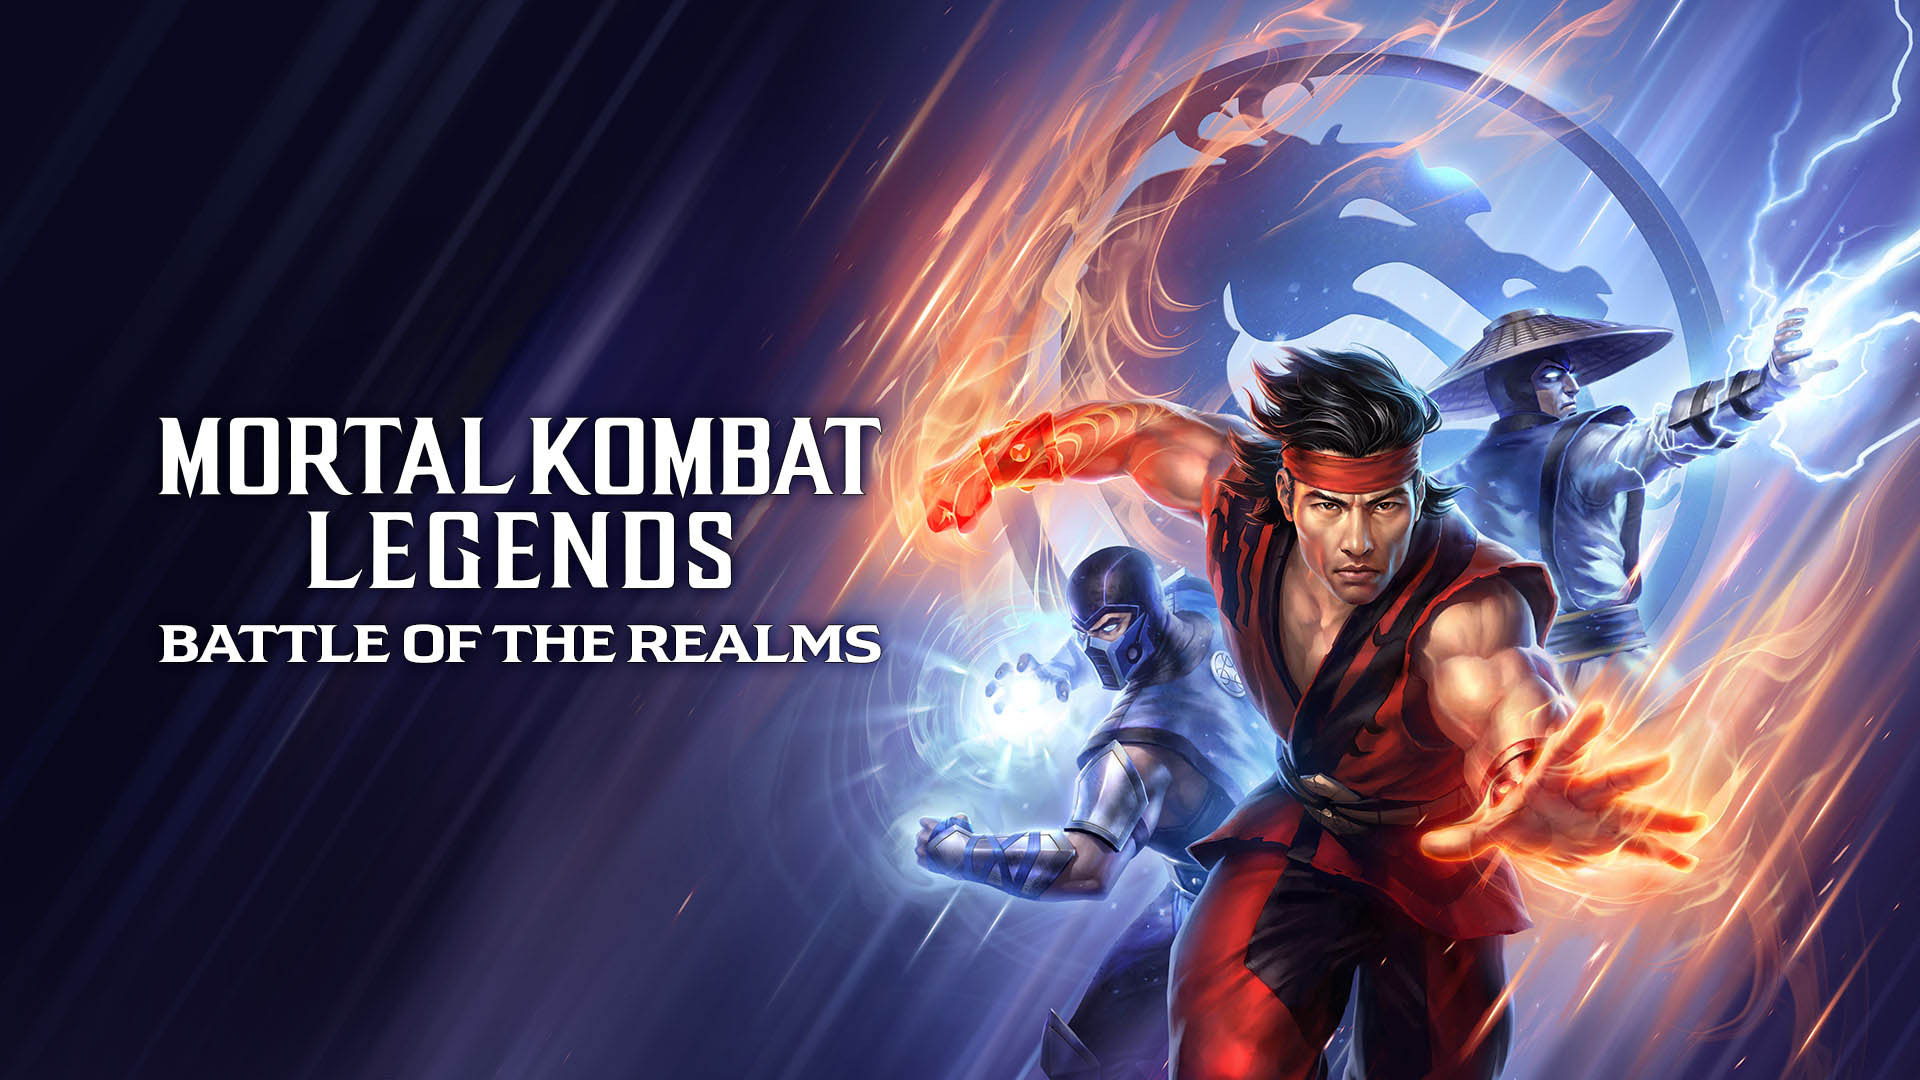 Kombat battle of legends the realms mortal Mortal Kombat